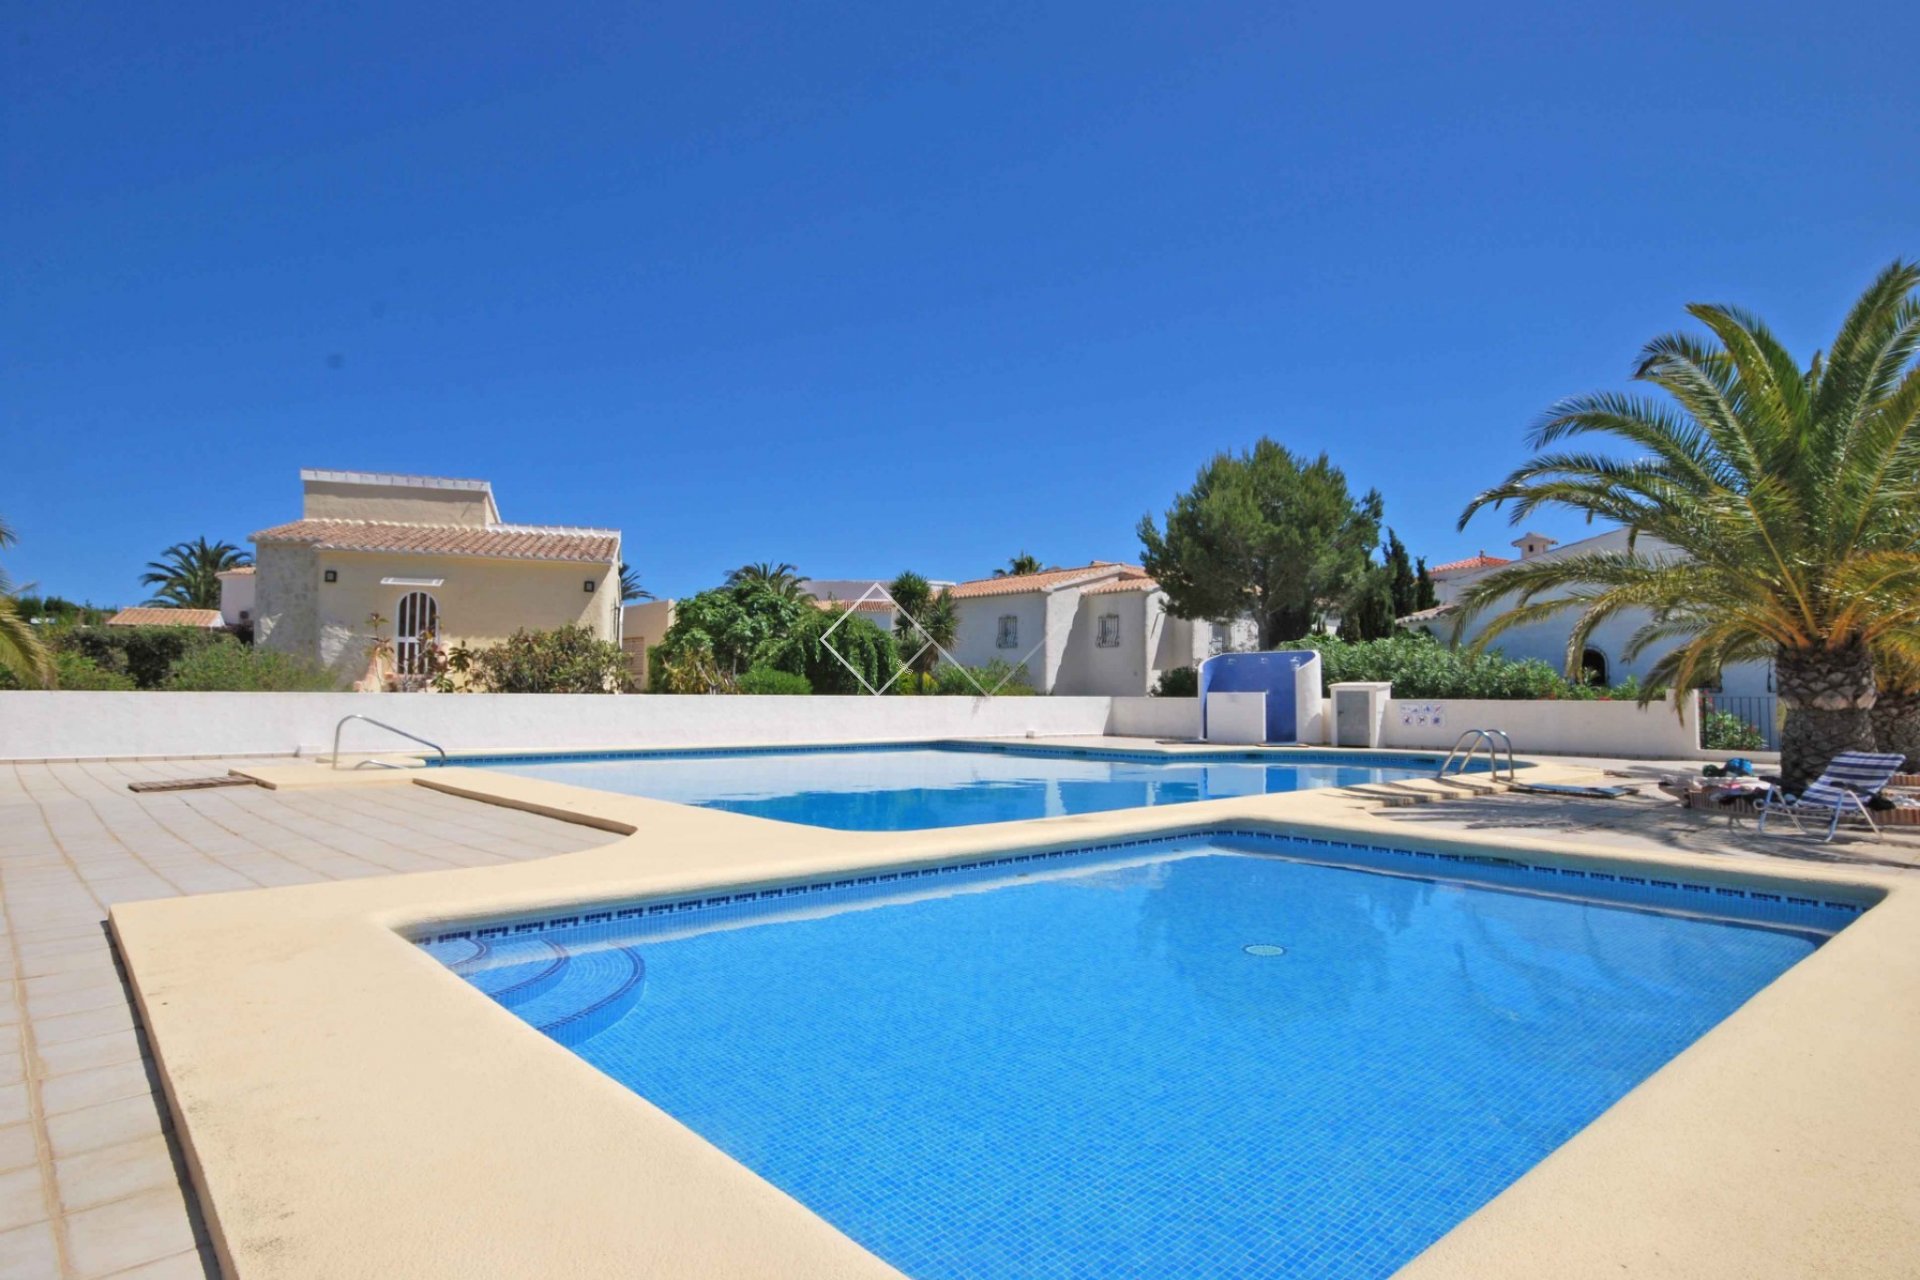 community pool - Nice villa for sale on Cumbre del Sol, Benitachell